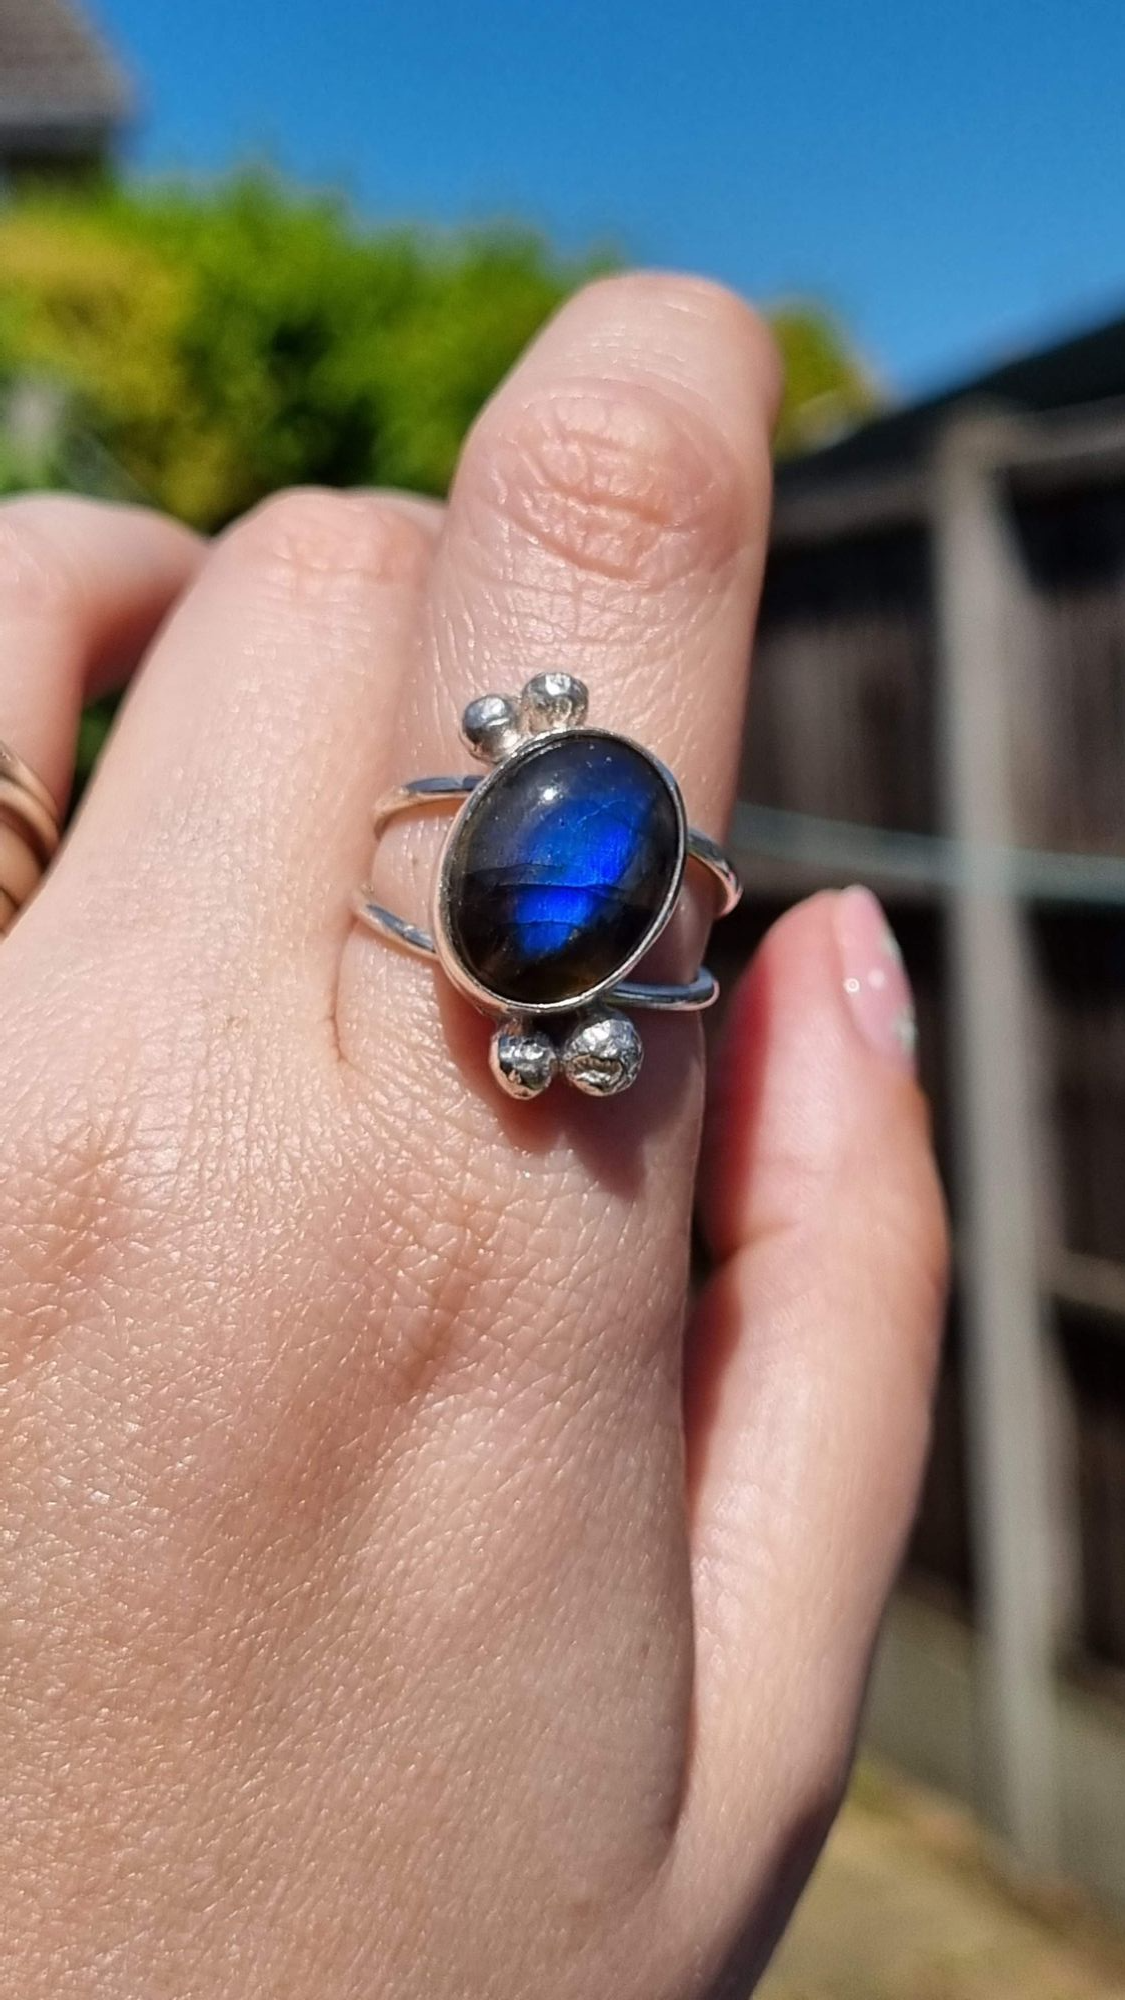 A beautiful handmade sterling silver gemstone statement ring featuring a flashy blue Labradorite gemstone